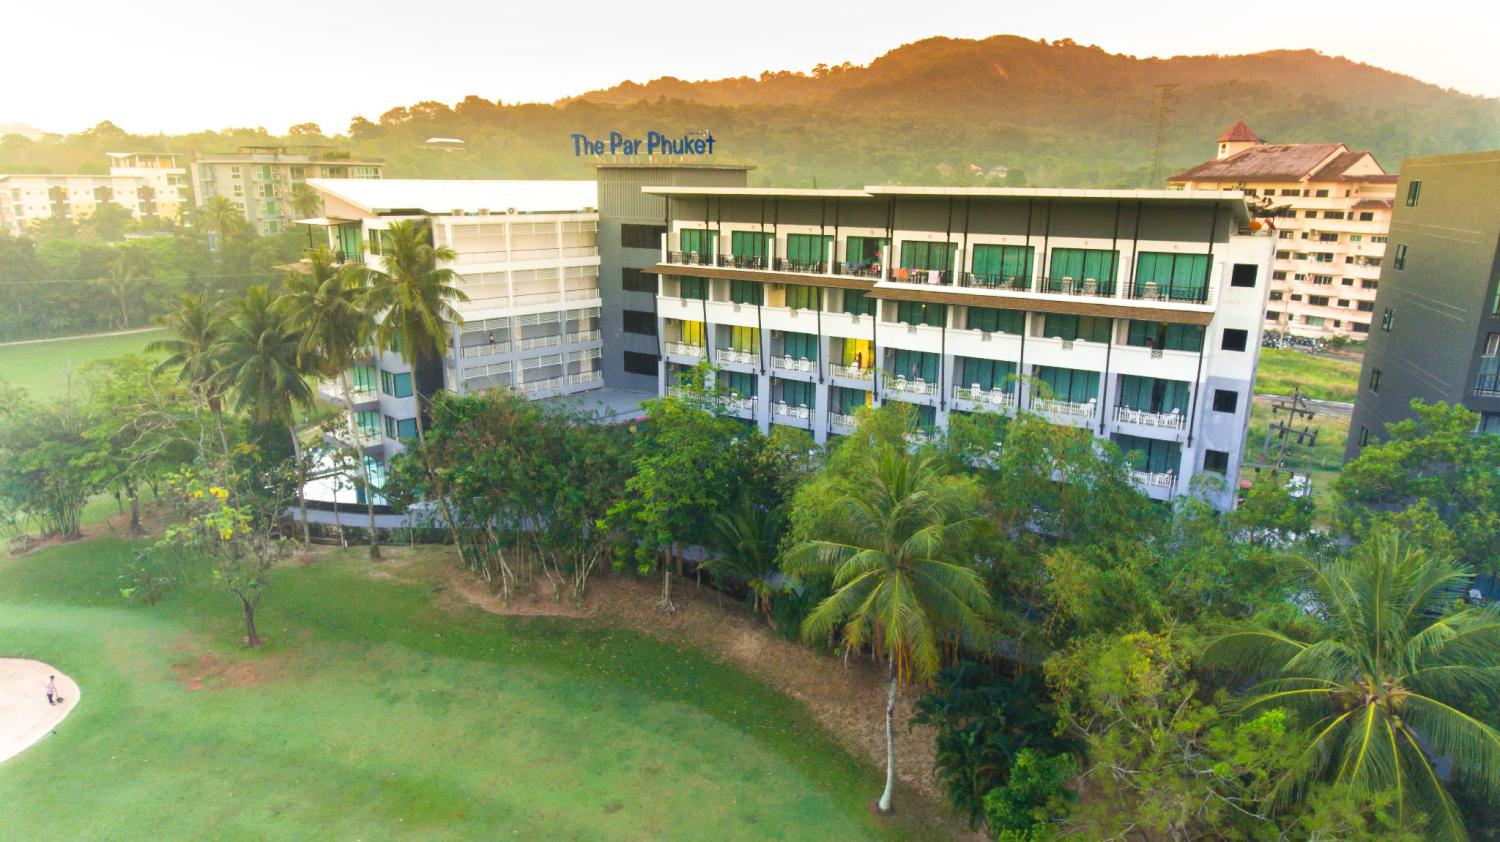 The Par Phuket Hotel - Image 0